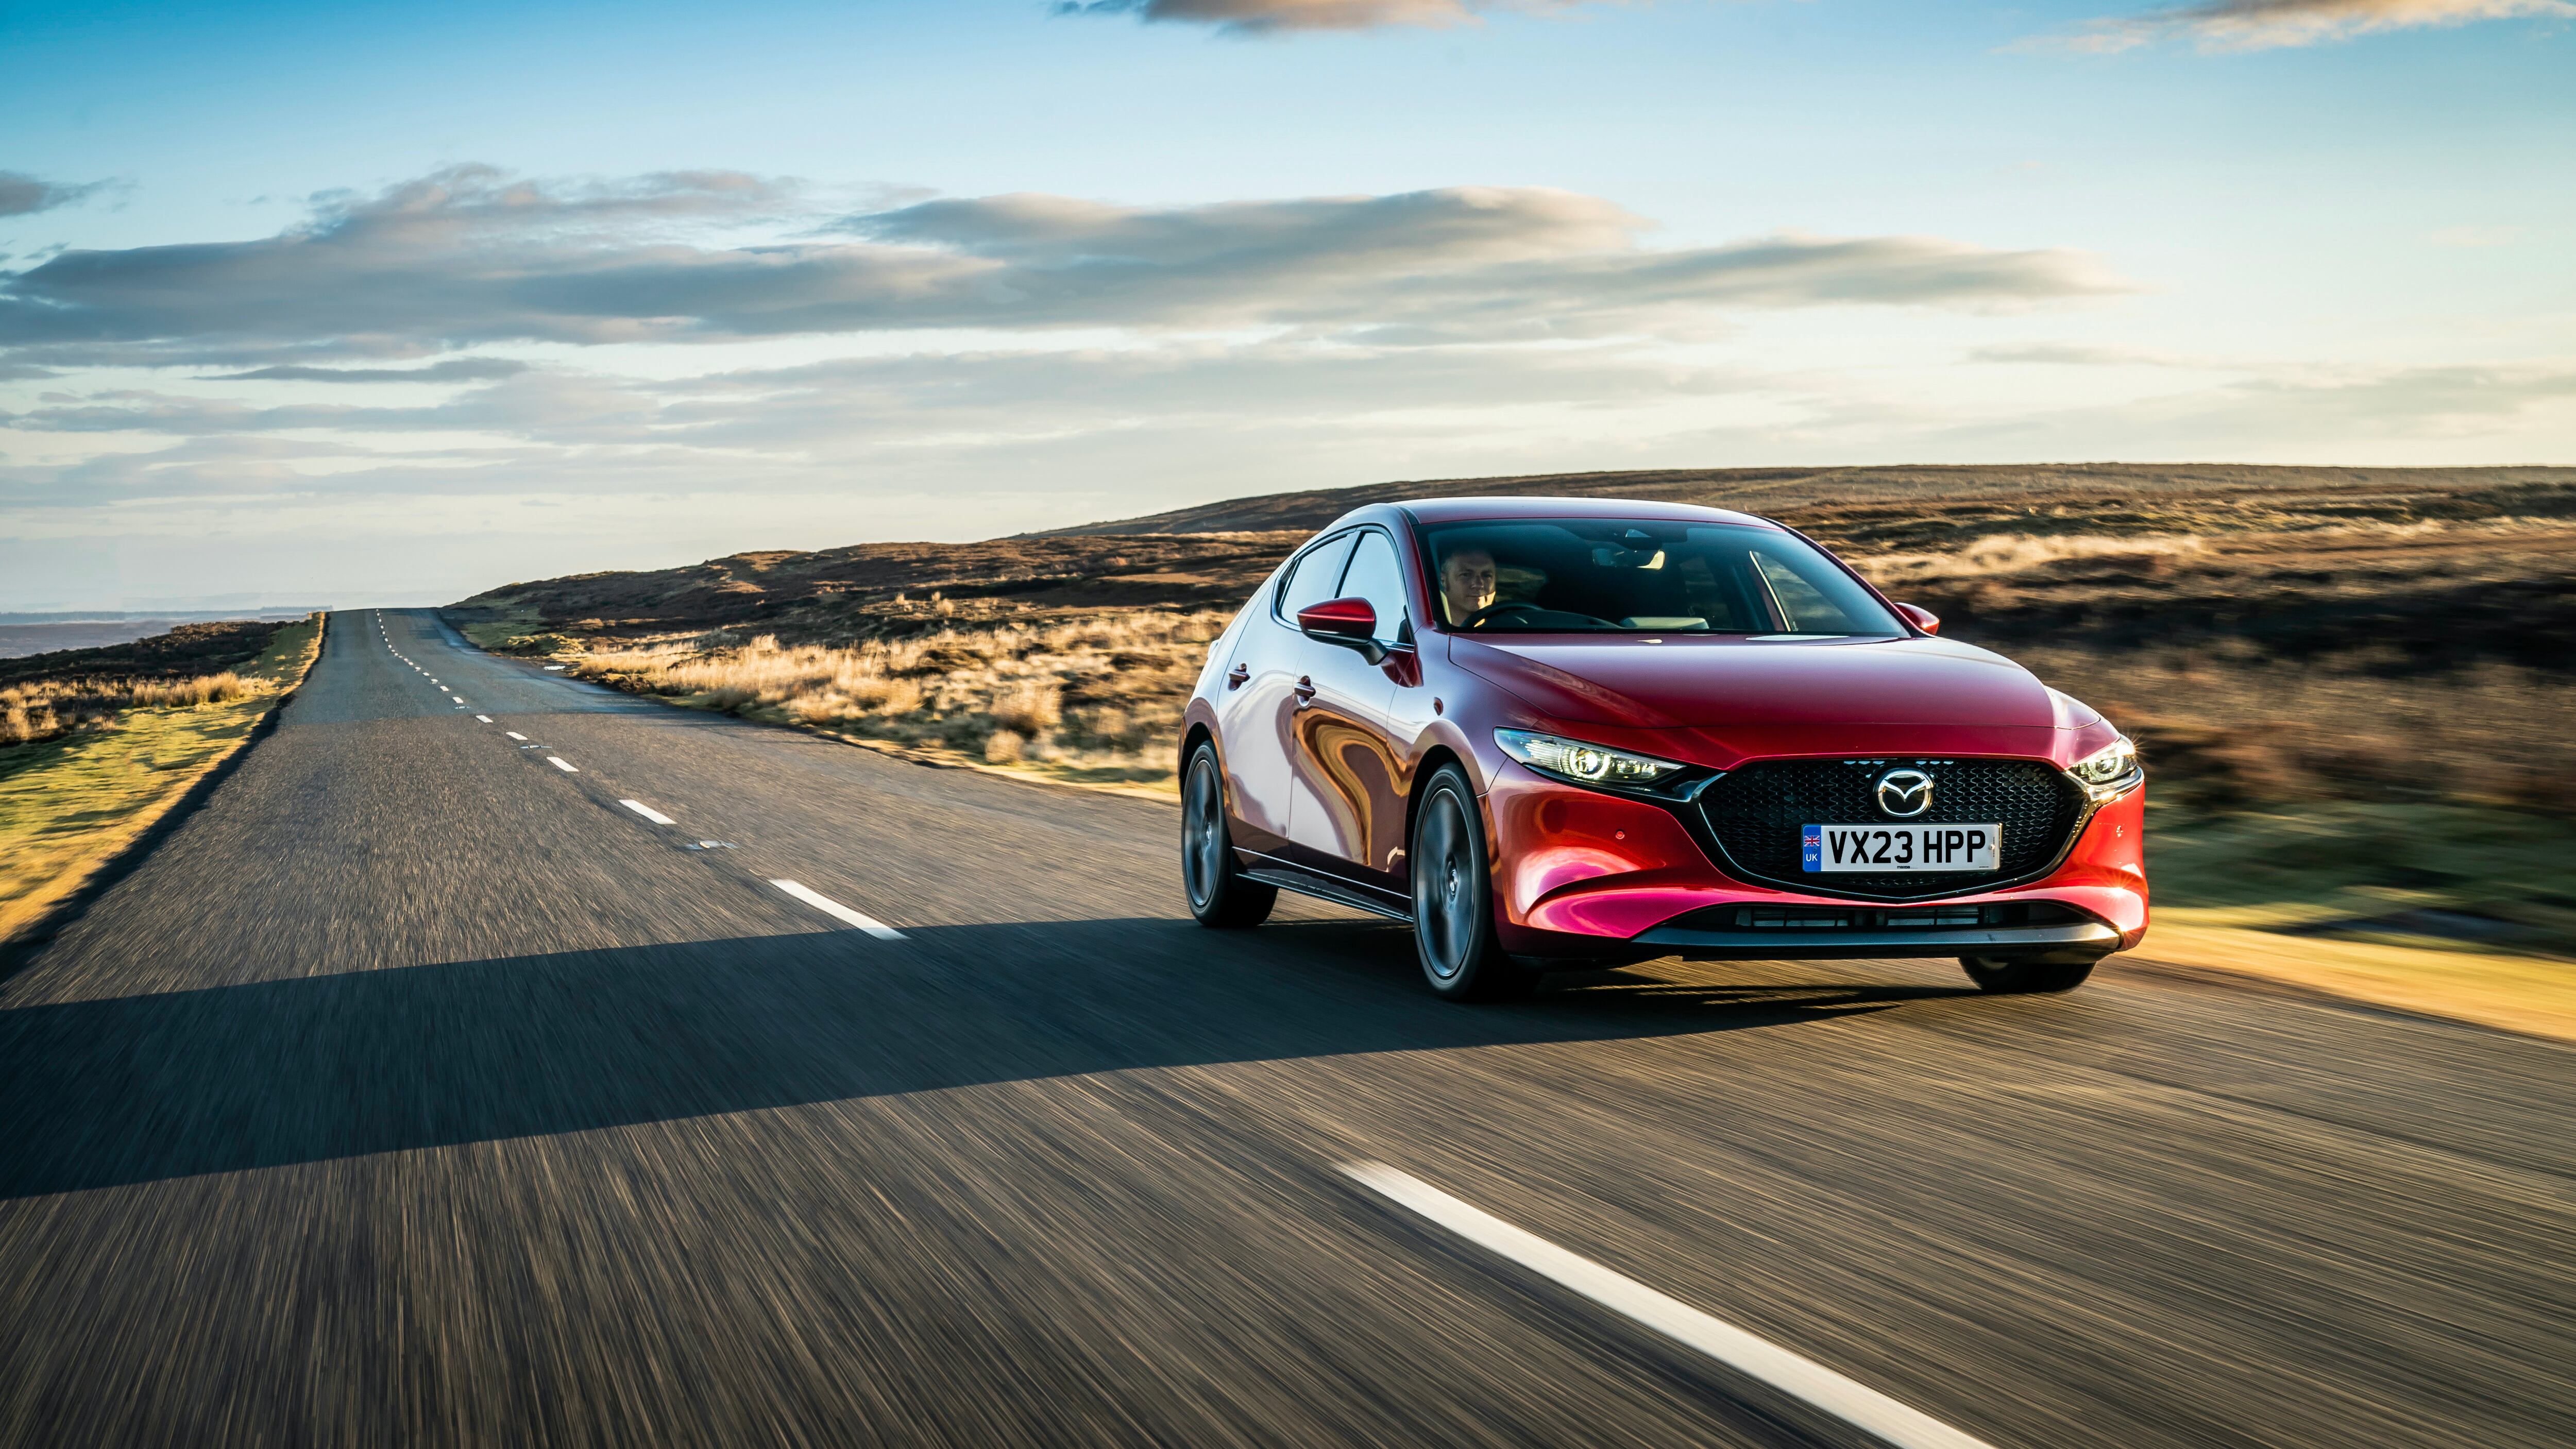 This generation of Mazda 3 hasn’t lost any visual impact